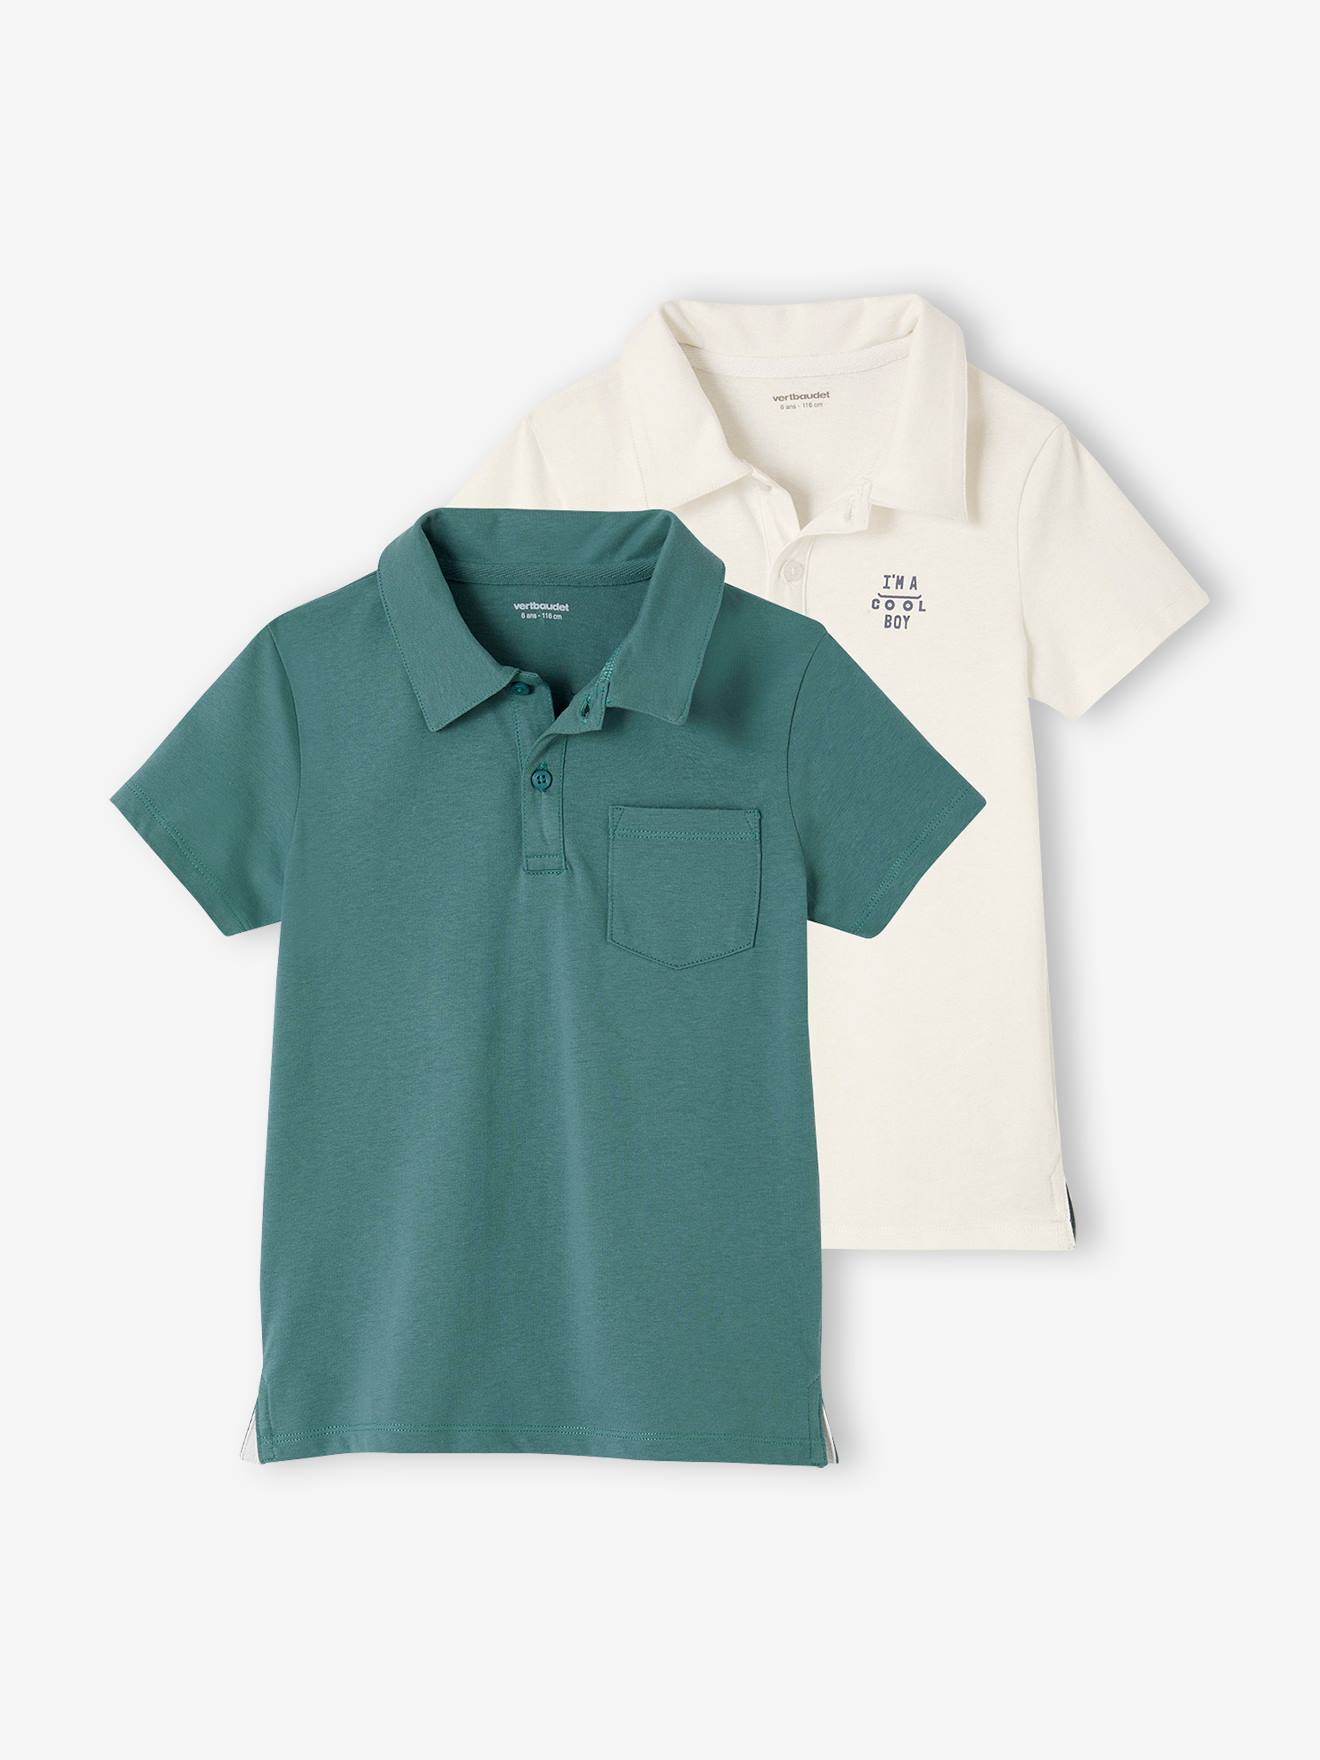 Set of 2 Plain, Short Sleeve Polo Shirts, for Boys aqua green